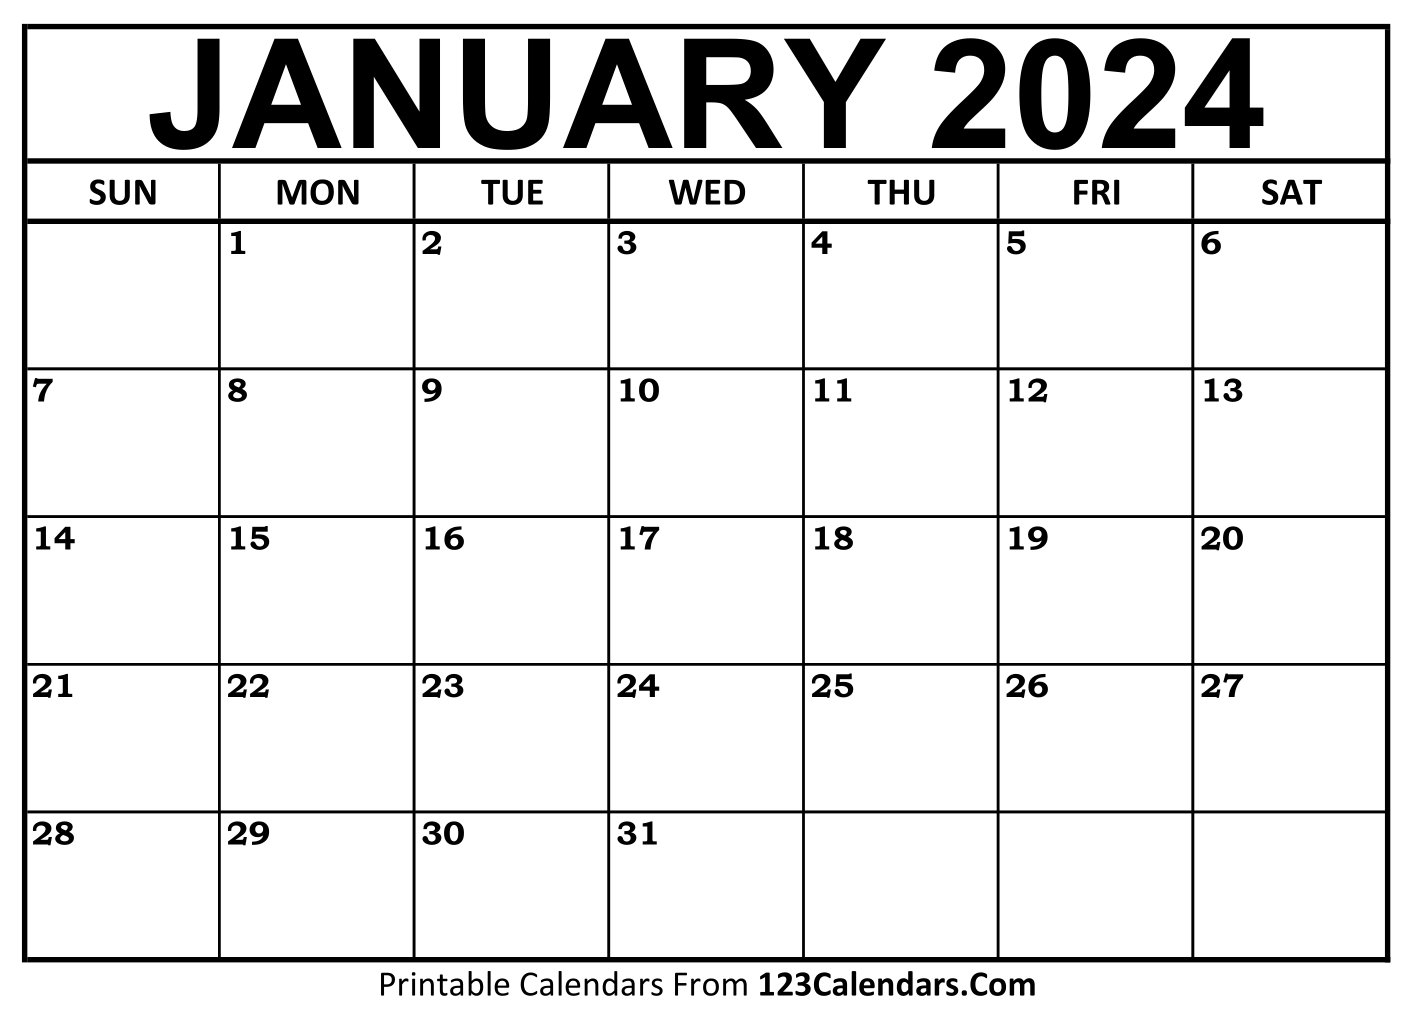 Printable January 2024 Calendar Templates - 123Calendars for January 2024 Calendar Free Printable Calendar